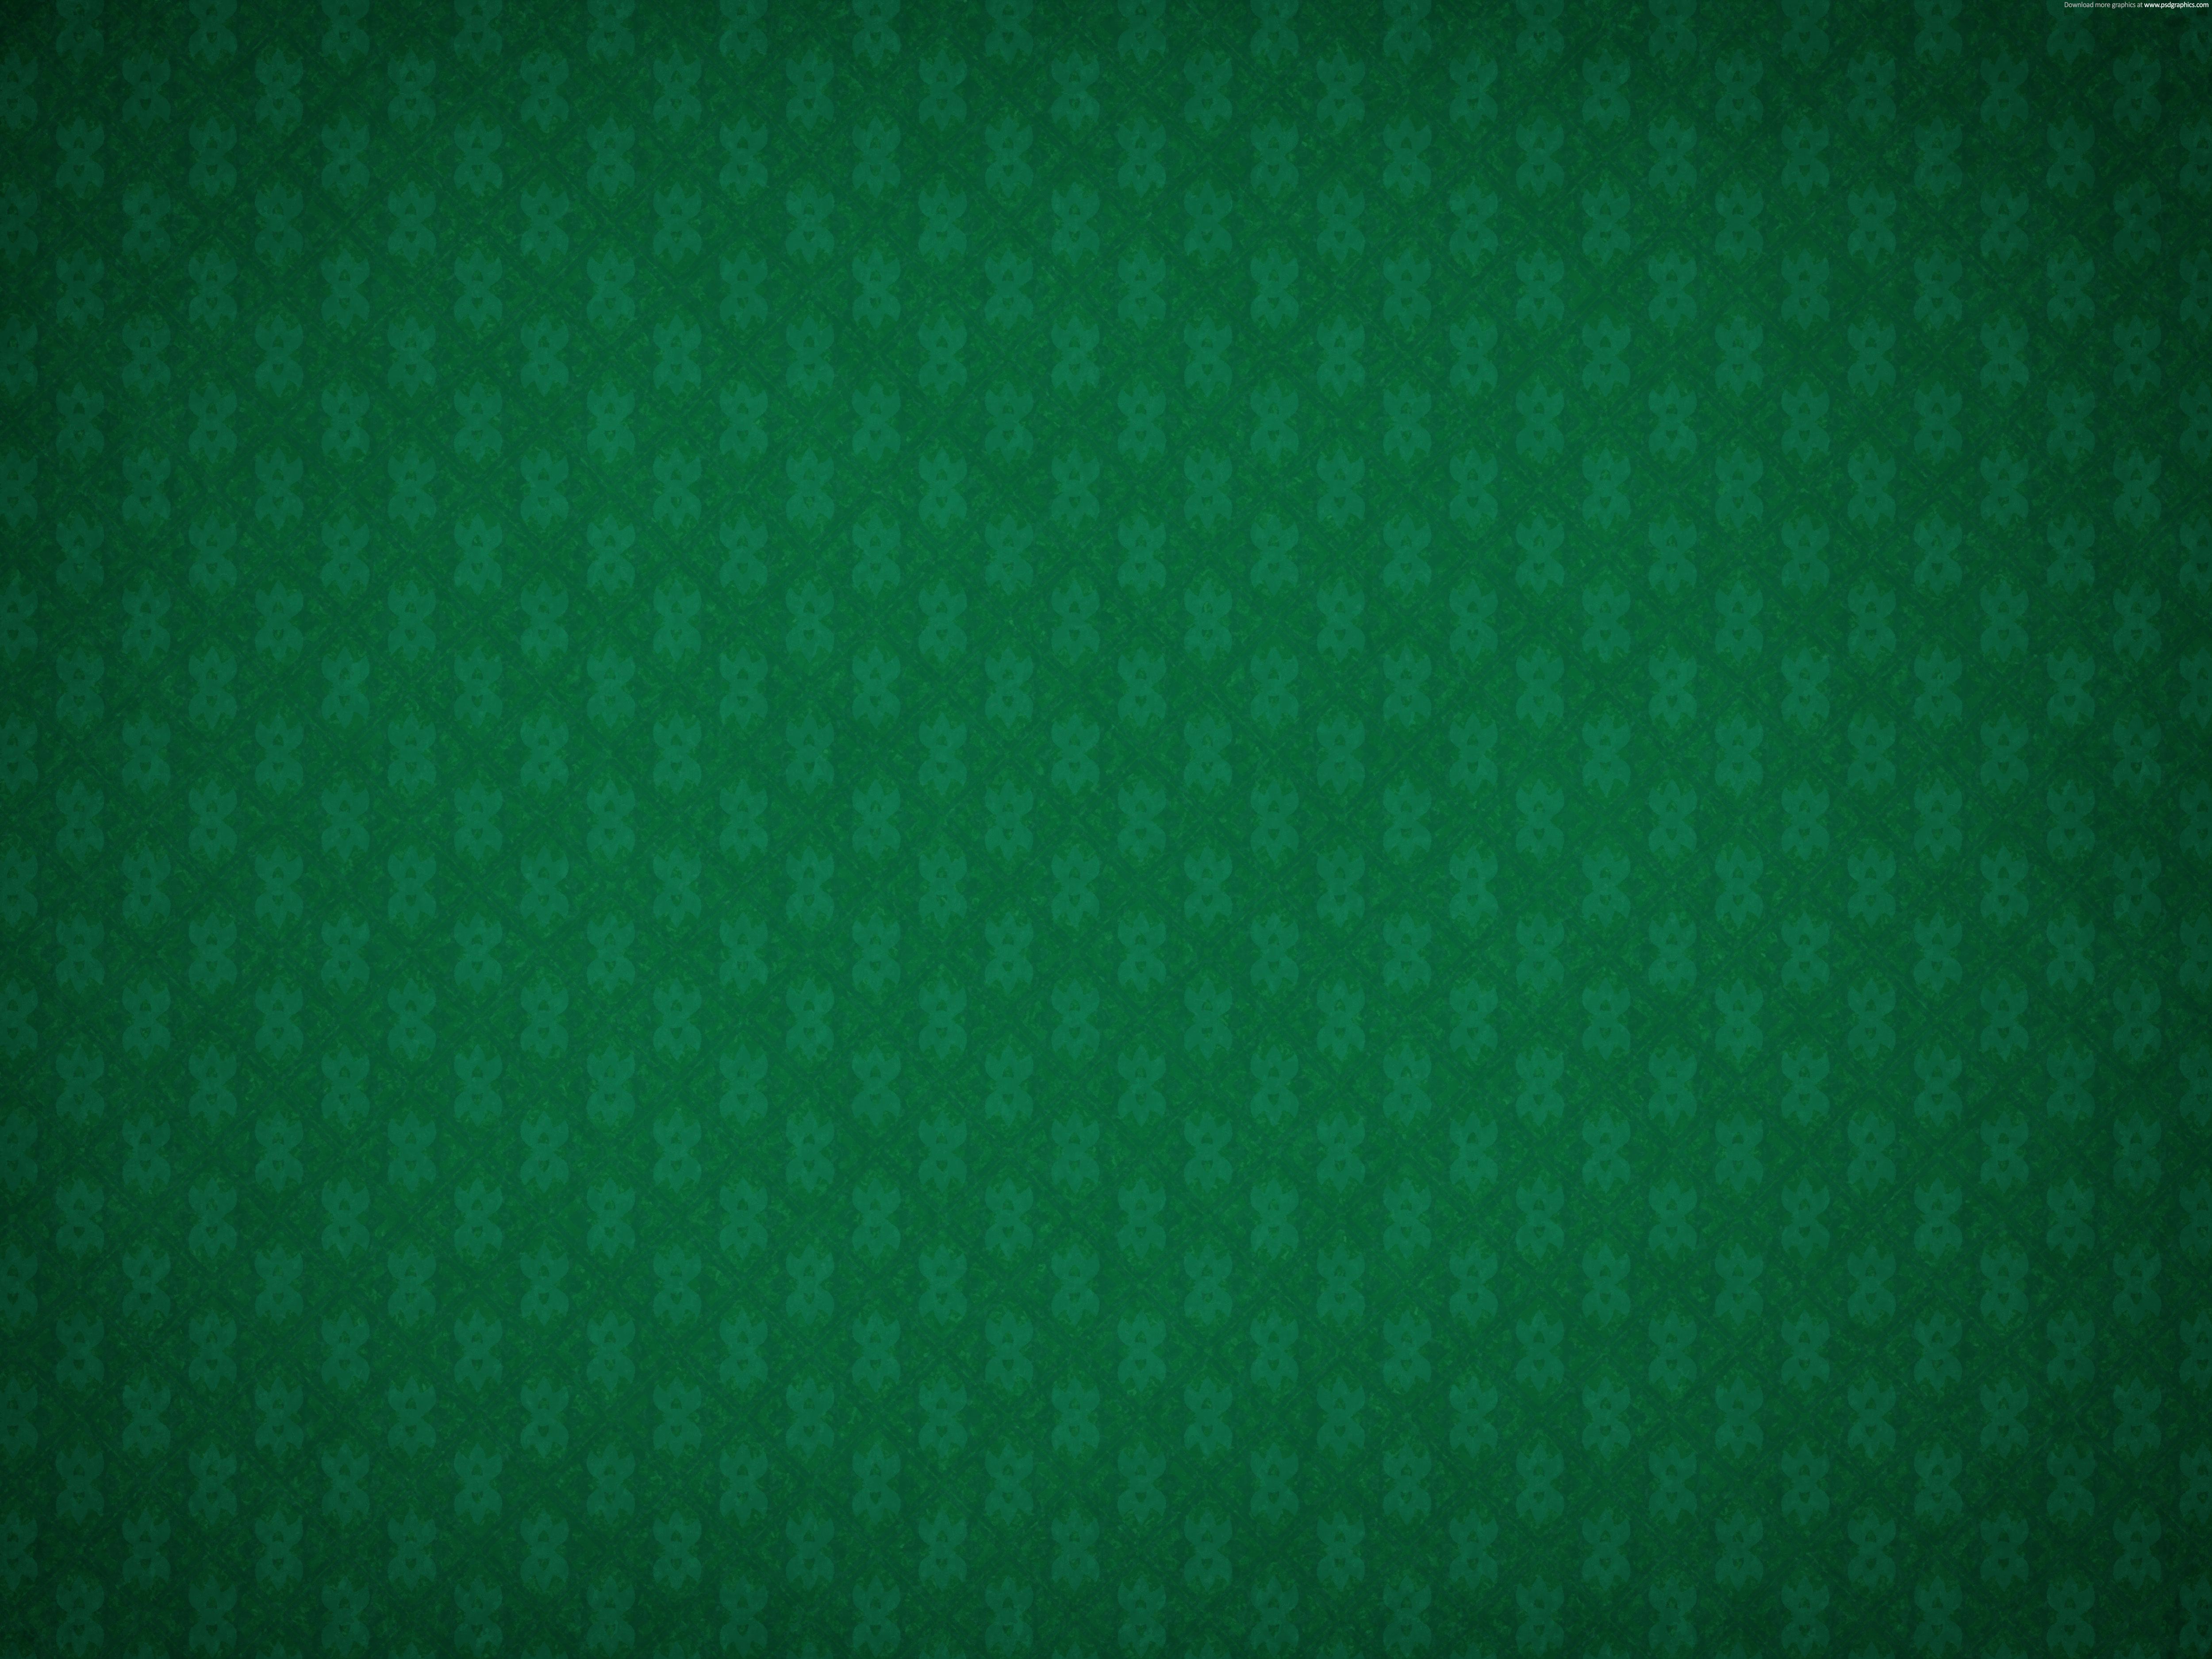 Green grunge pattern